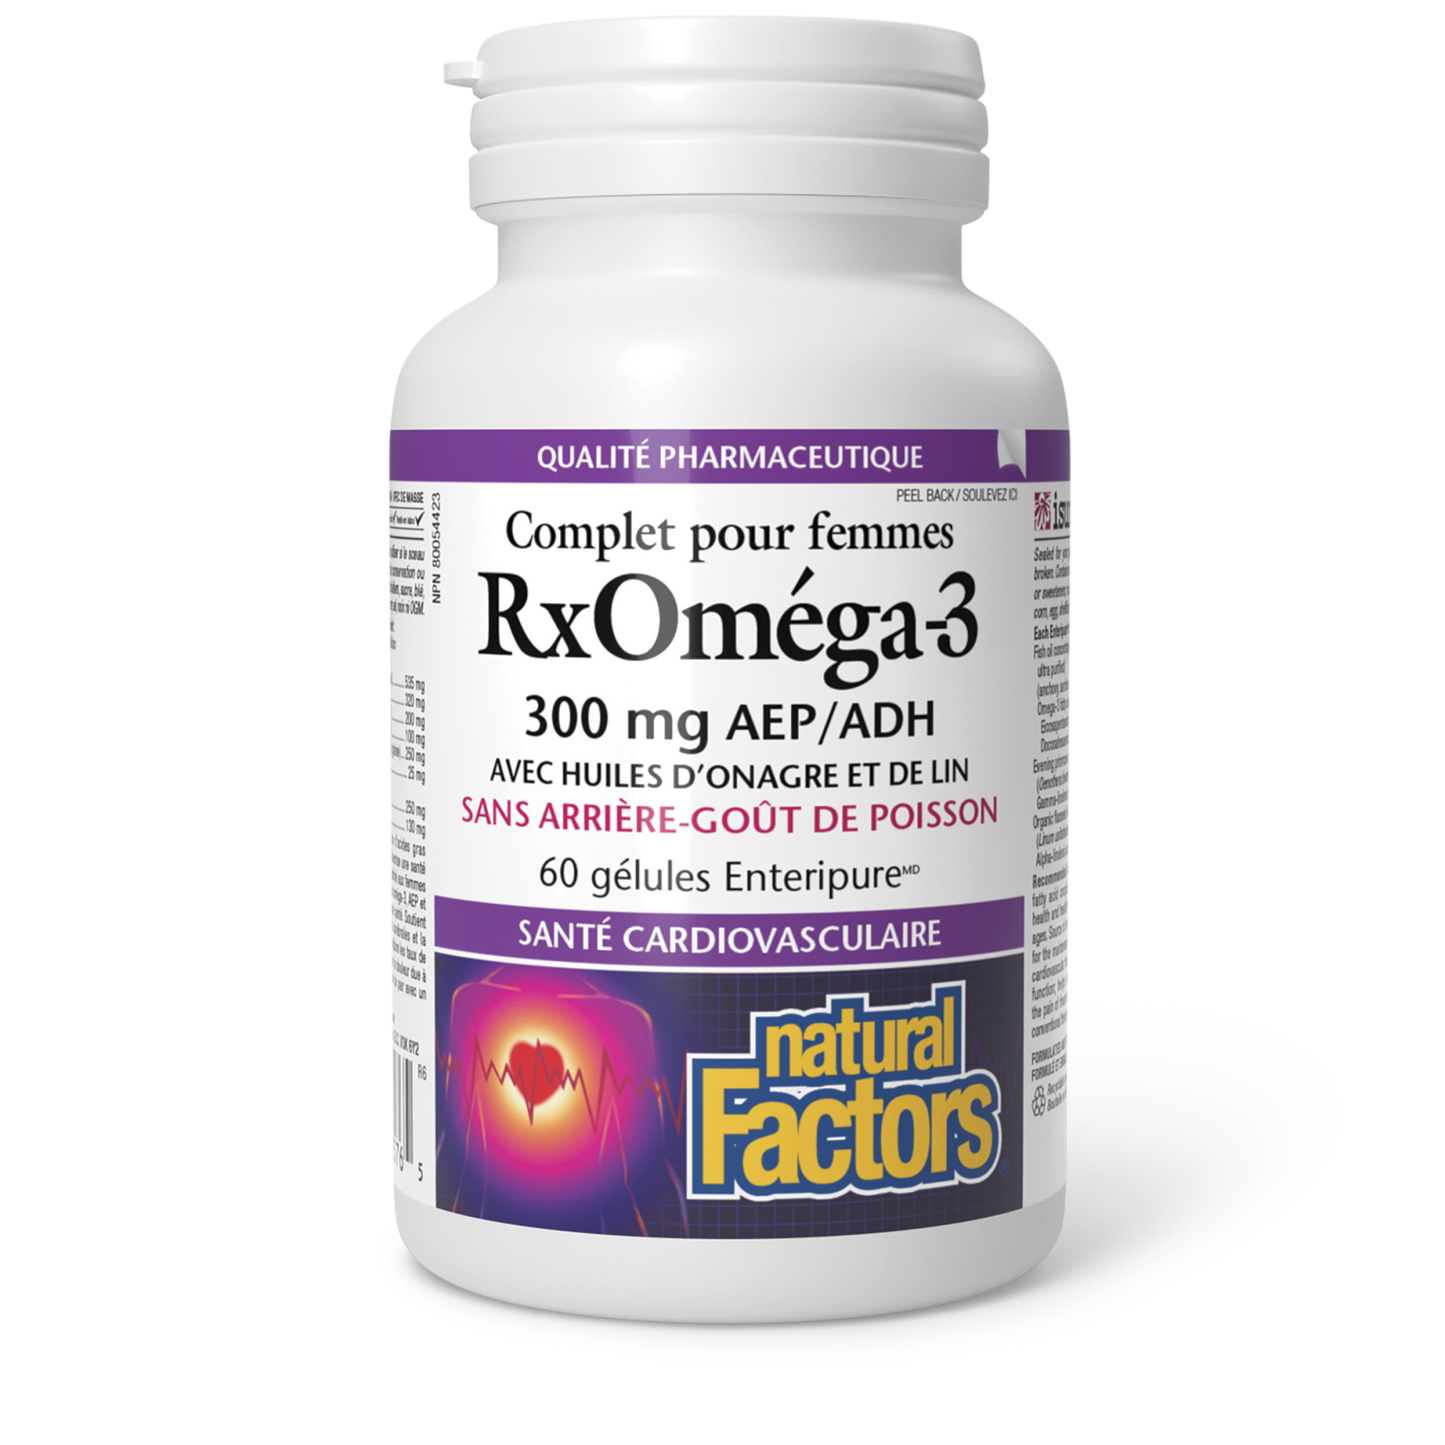 RxOméga-3 complet pour femmes 300 mg AEP/ADH, Natural Factors|v|image|3576